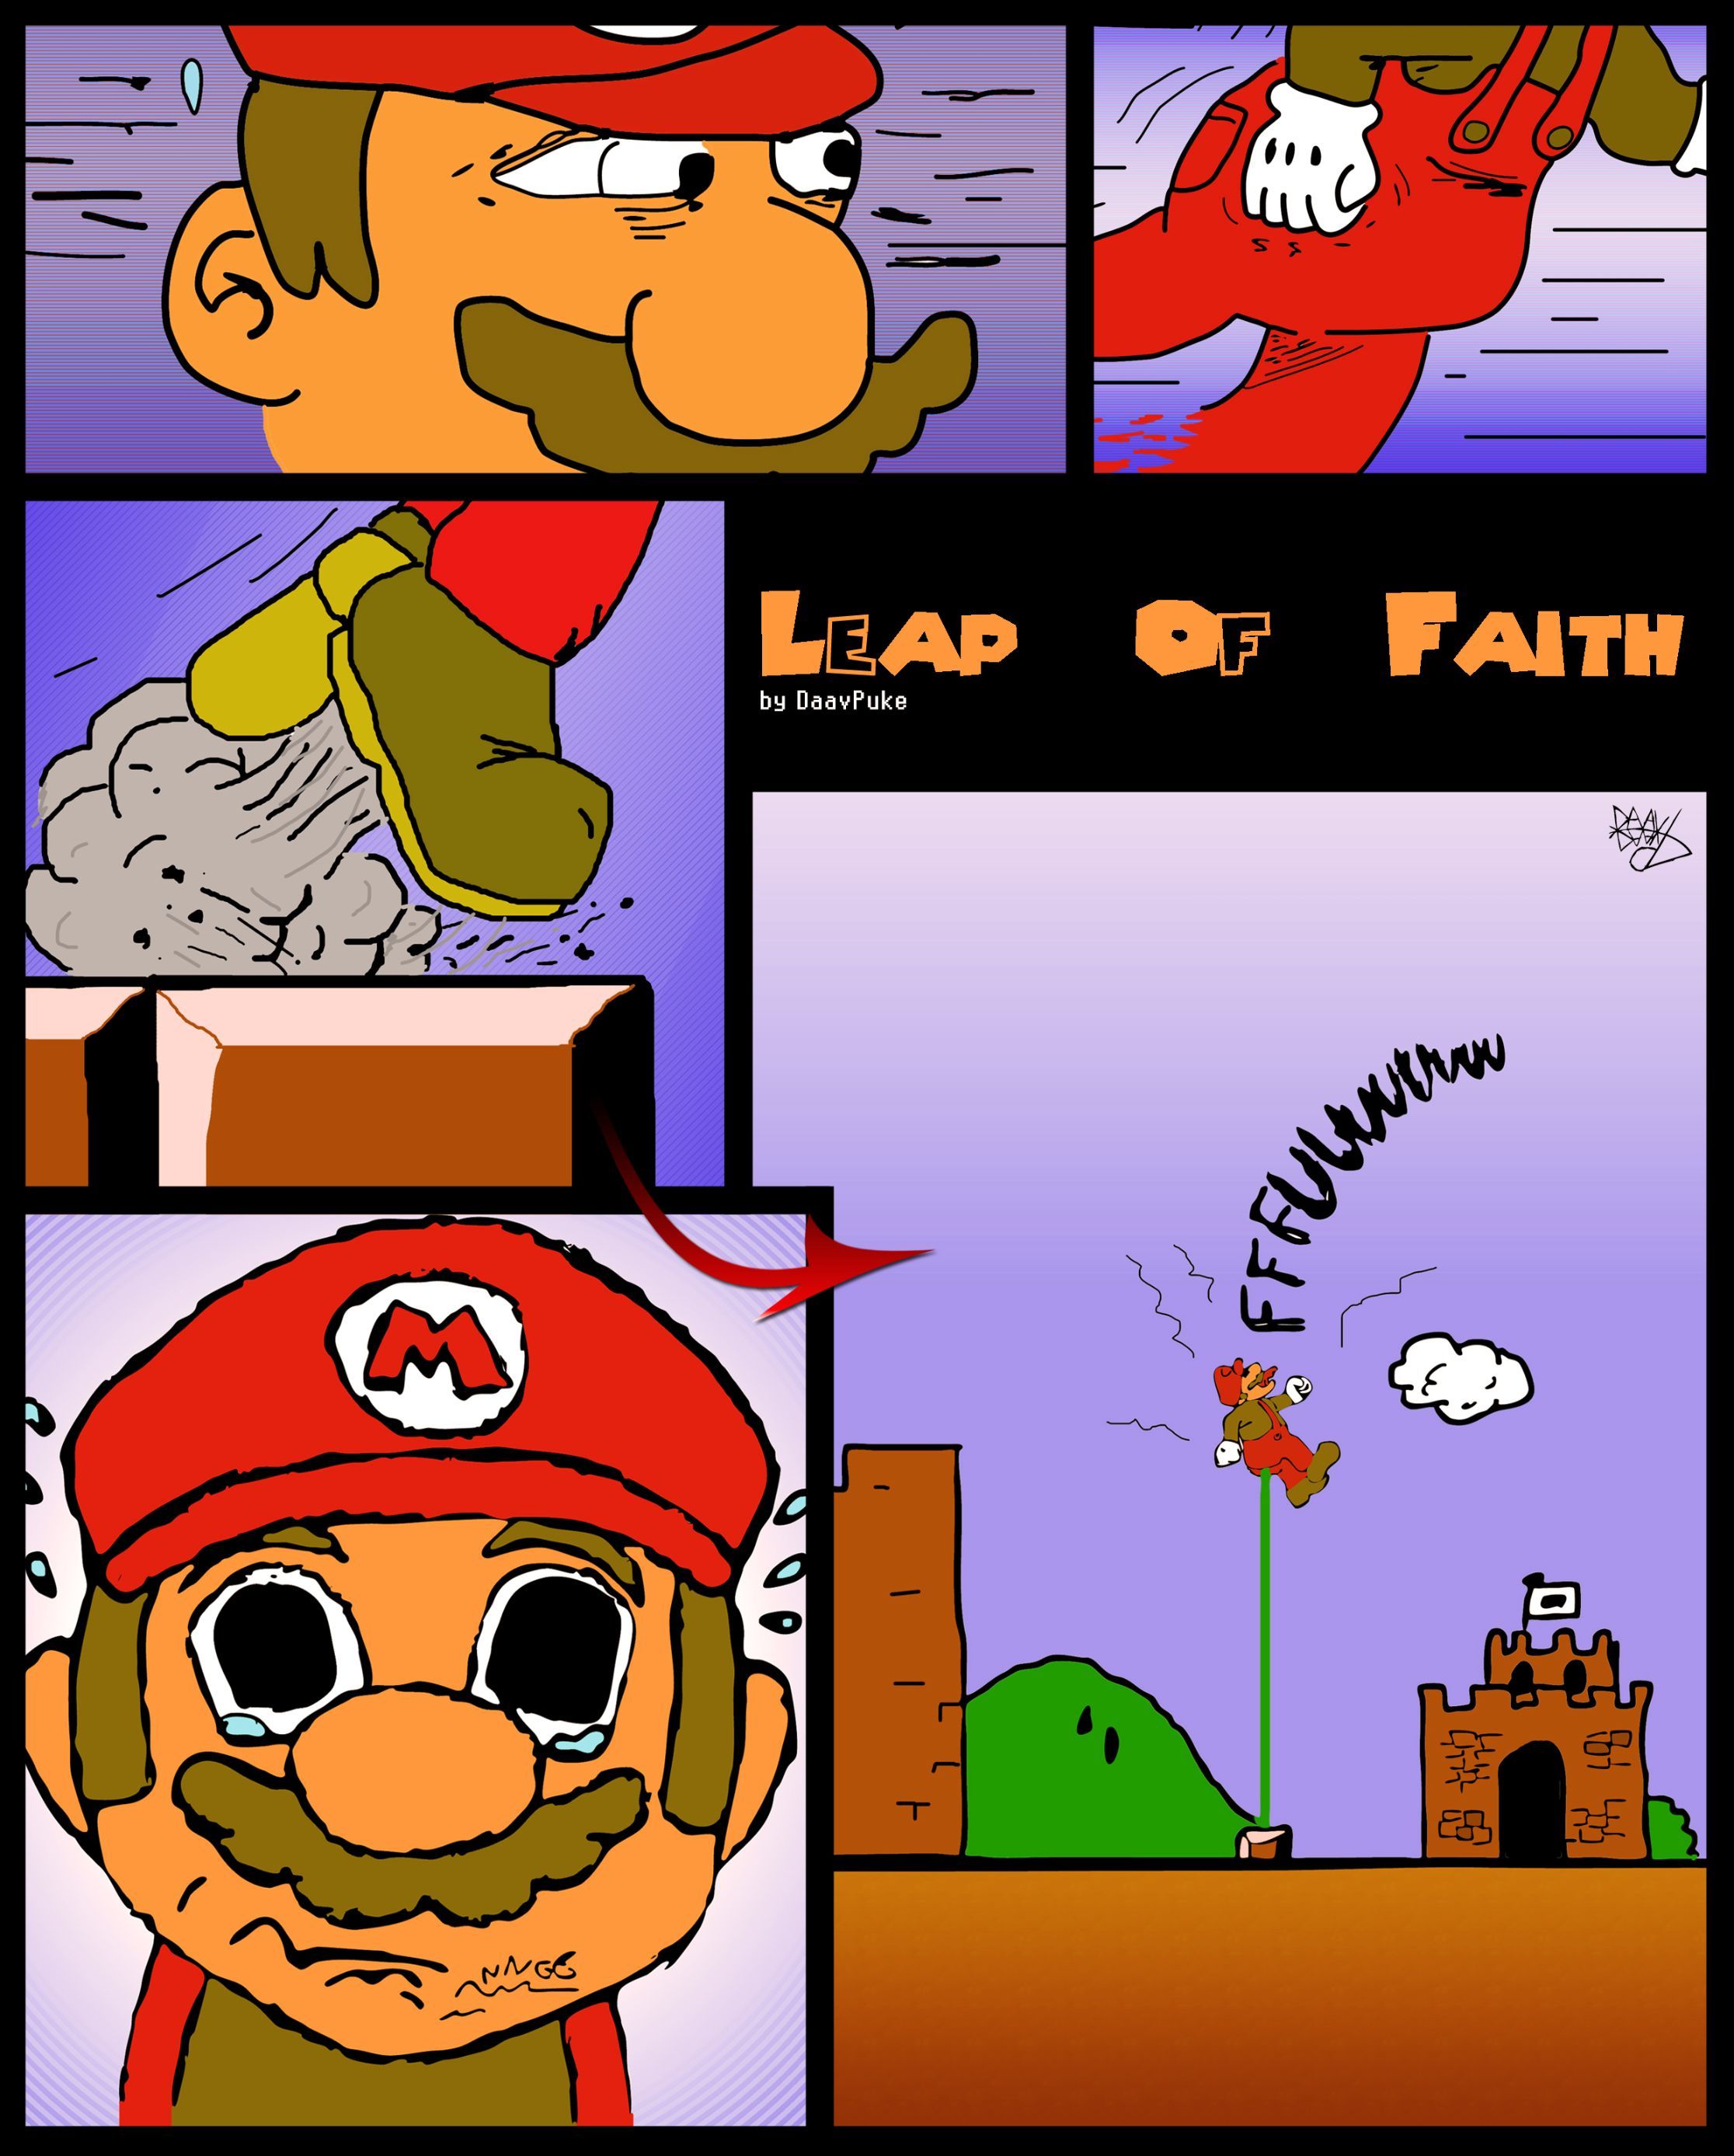 NoobFeed - Web Comic 1 - Mario's Leap Of Faith